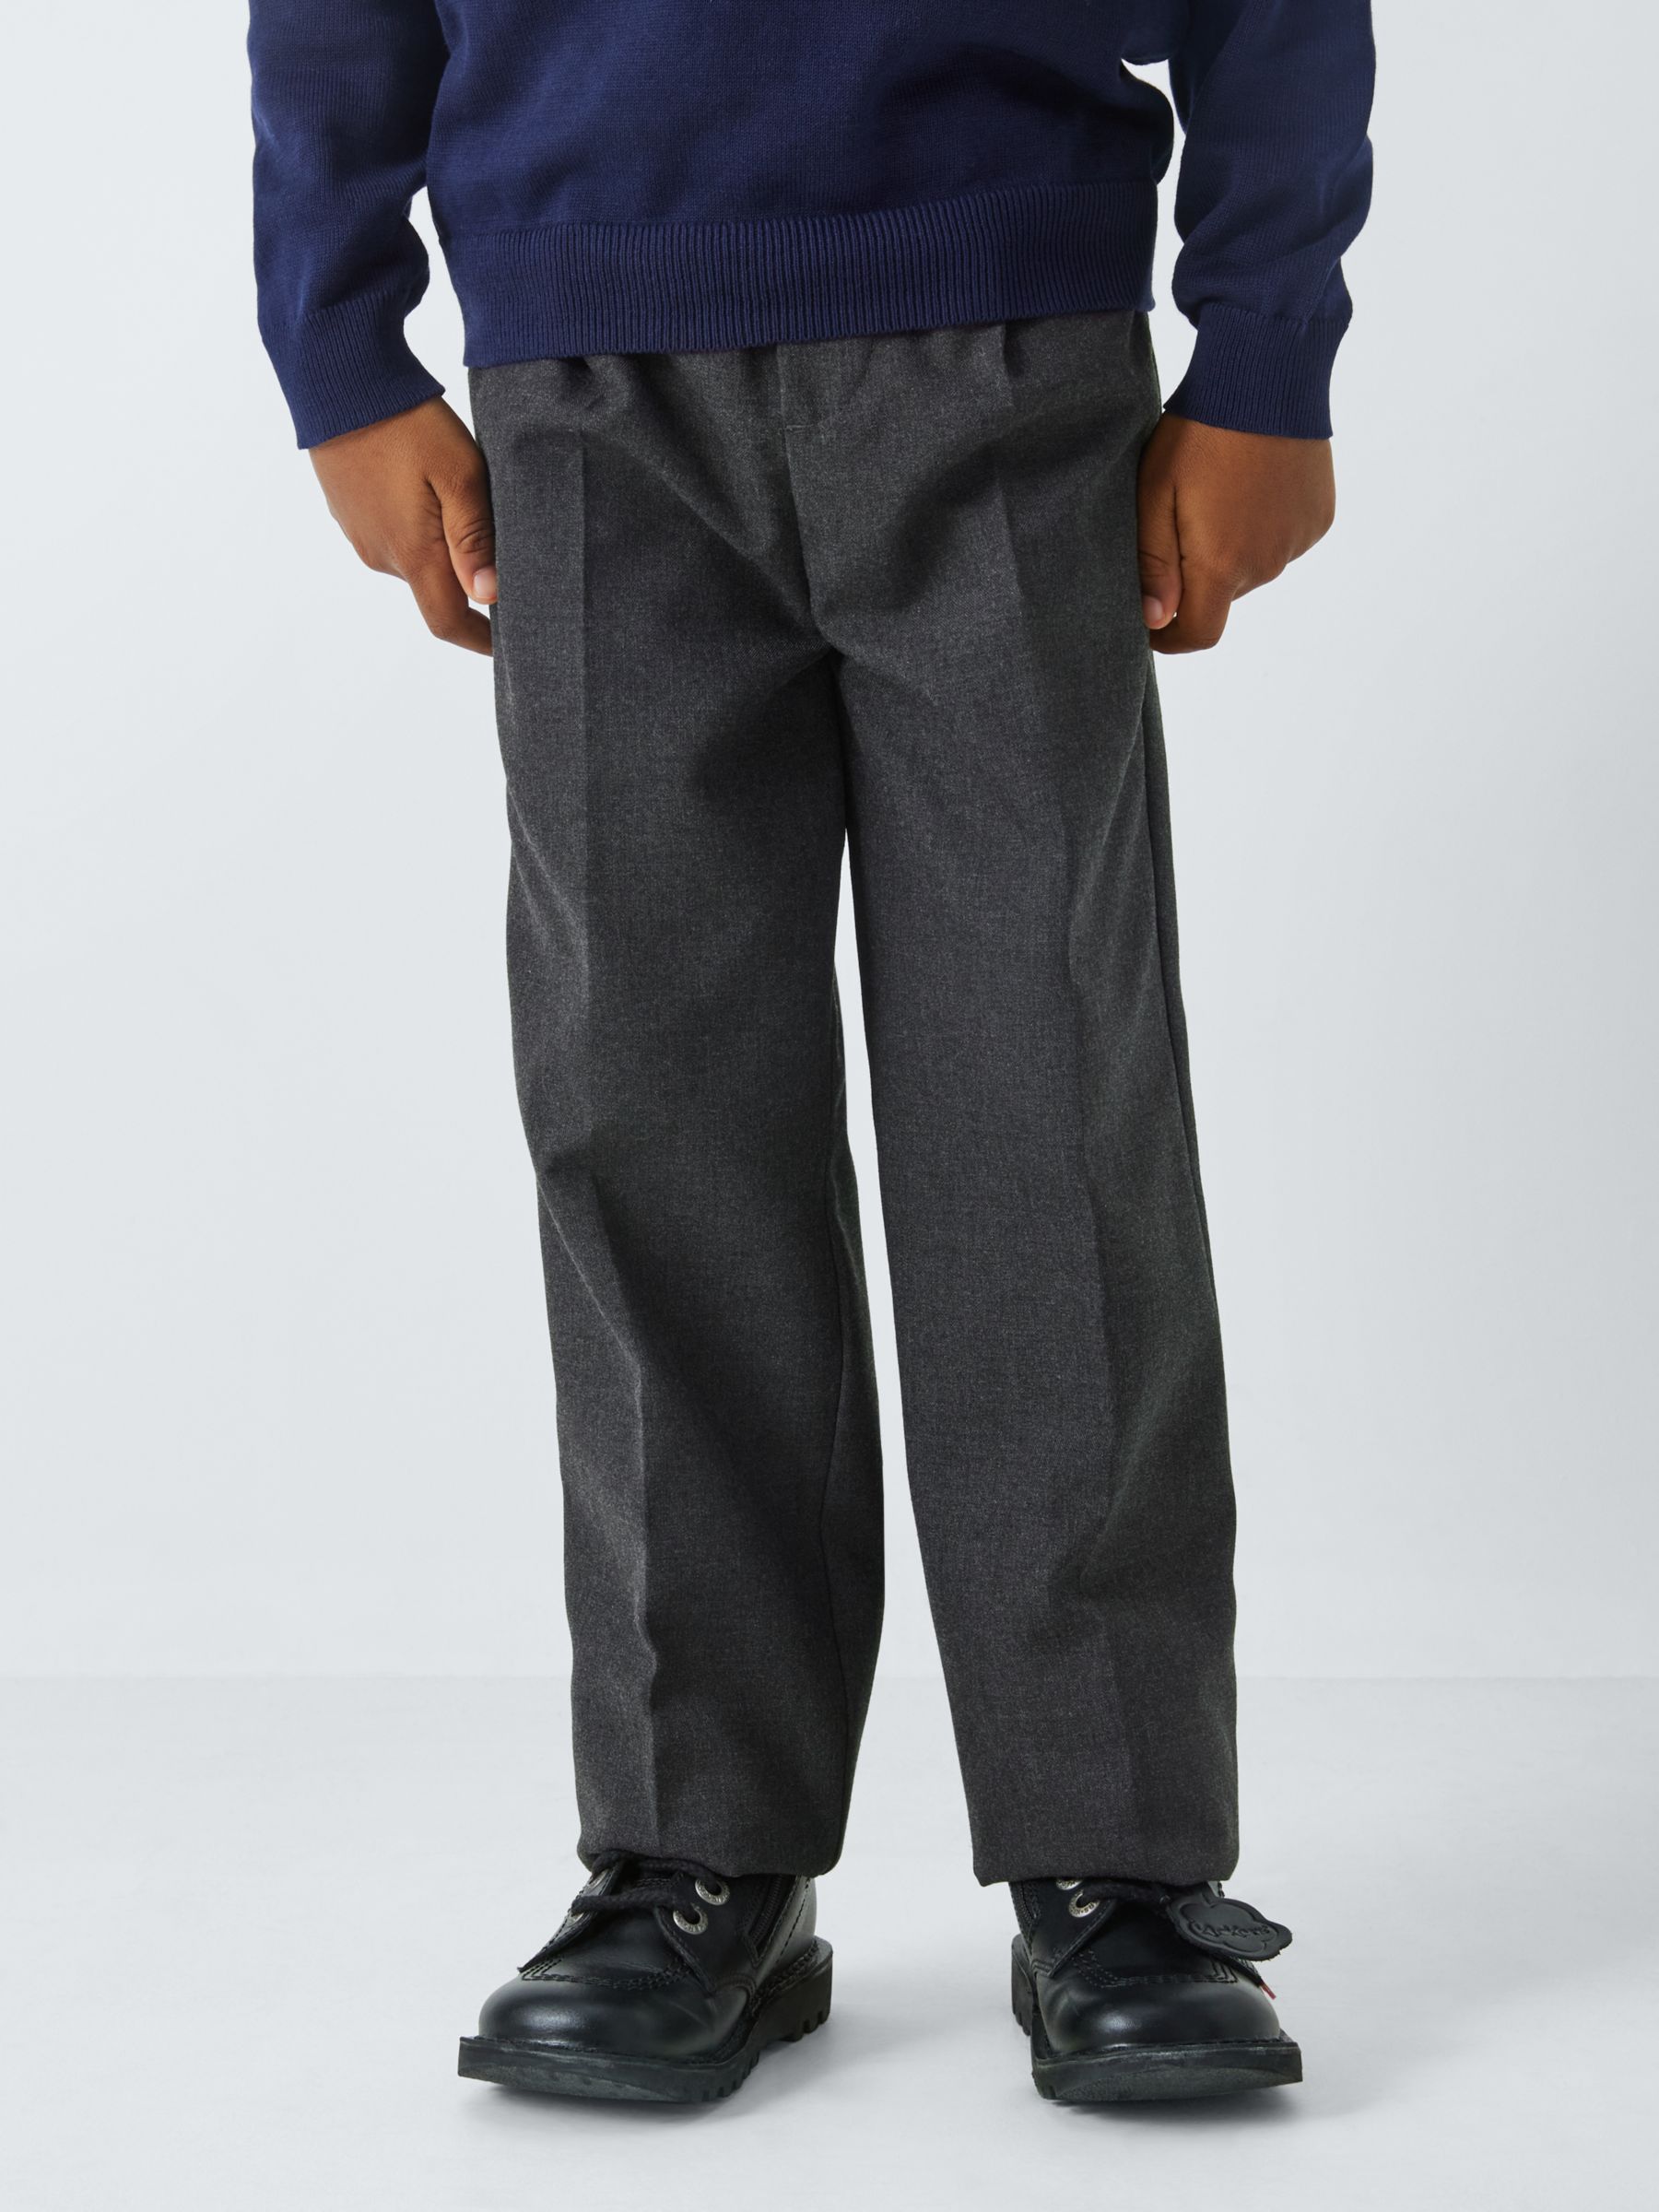 TWIN PACK Boys School Full Elastic Pull Up Trouser, School Uniform